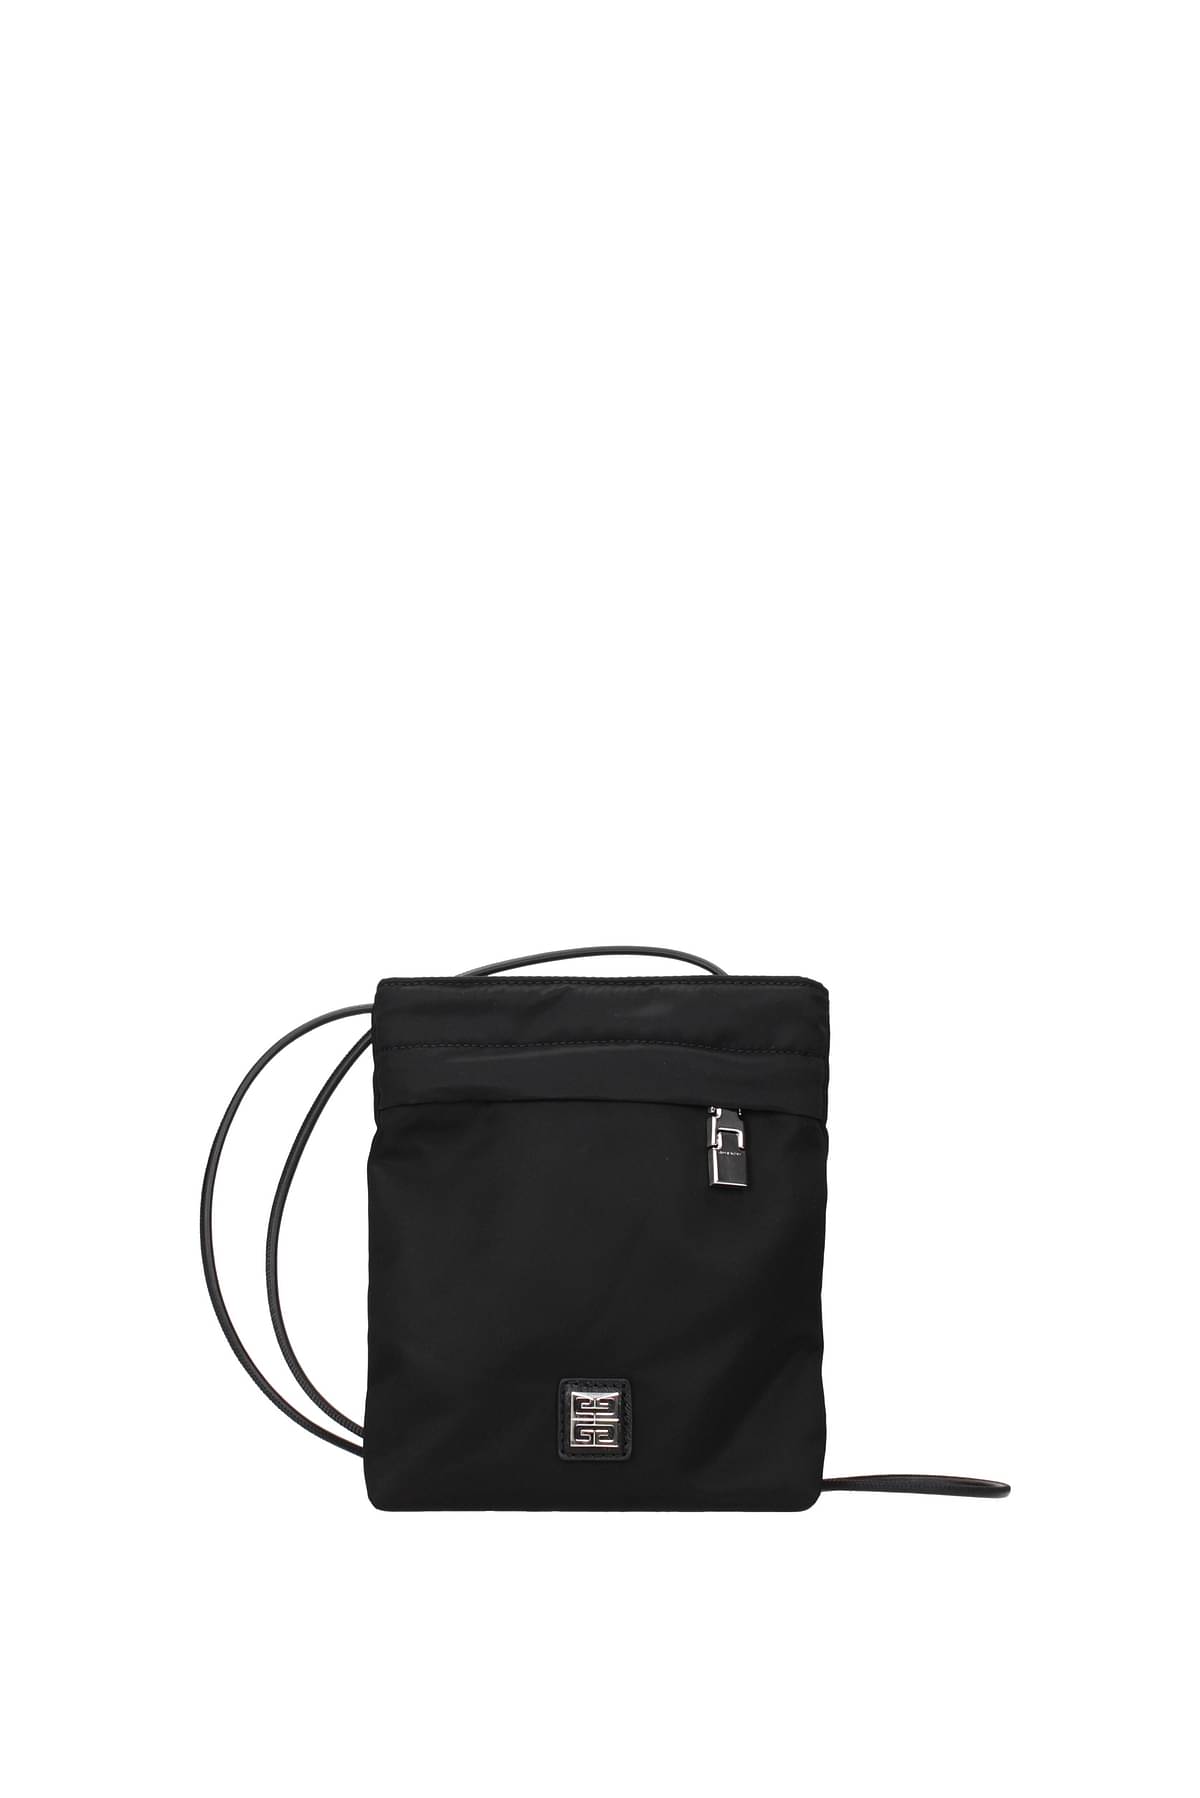 Cross body bags Givenchy - Black Box Leather Crossbody Bag - BB50VBB1UN001